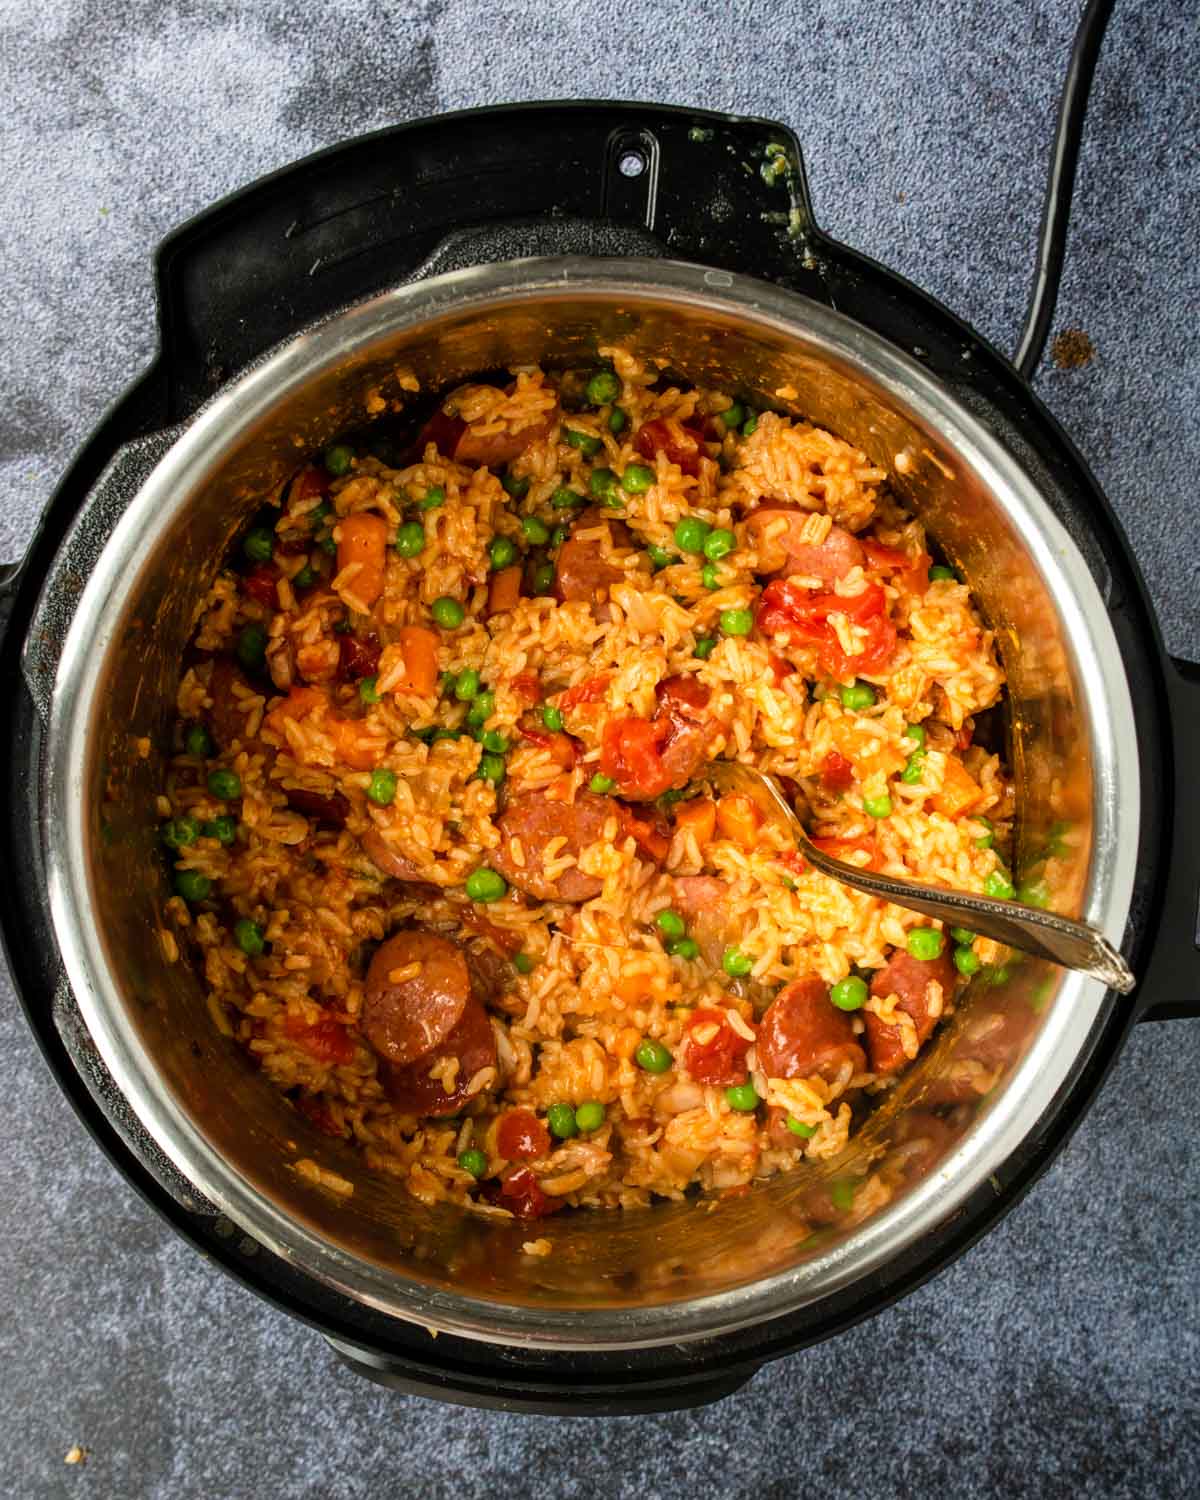 https://momsdinner.net/wp-content/uploads/2018/02/Instant-Pot-Cajun-rice-and-chicken-recipe-1.jpg